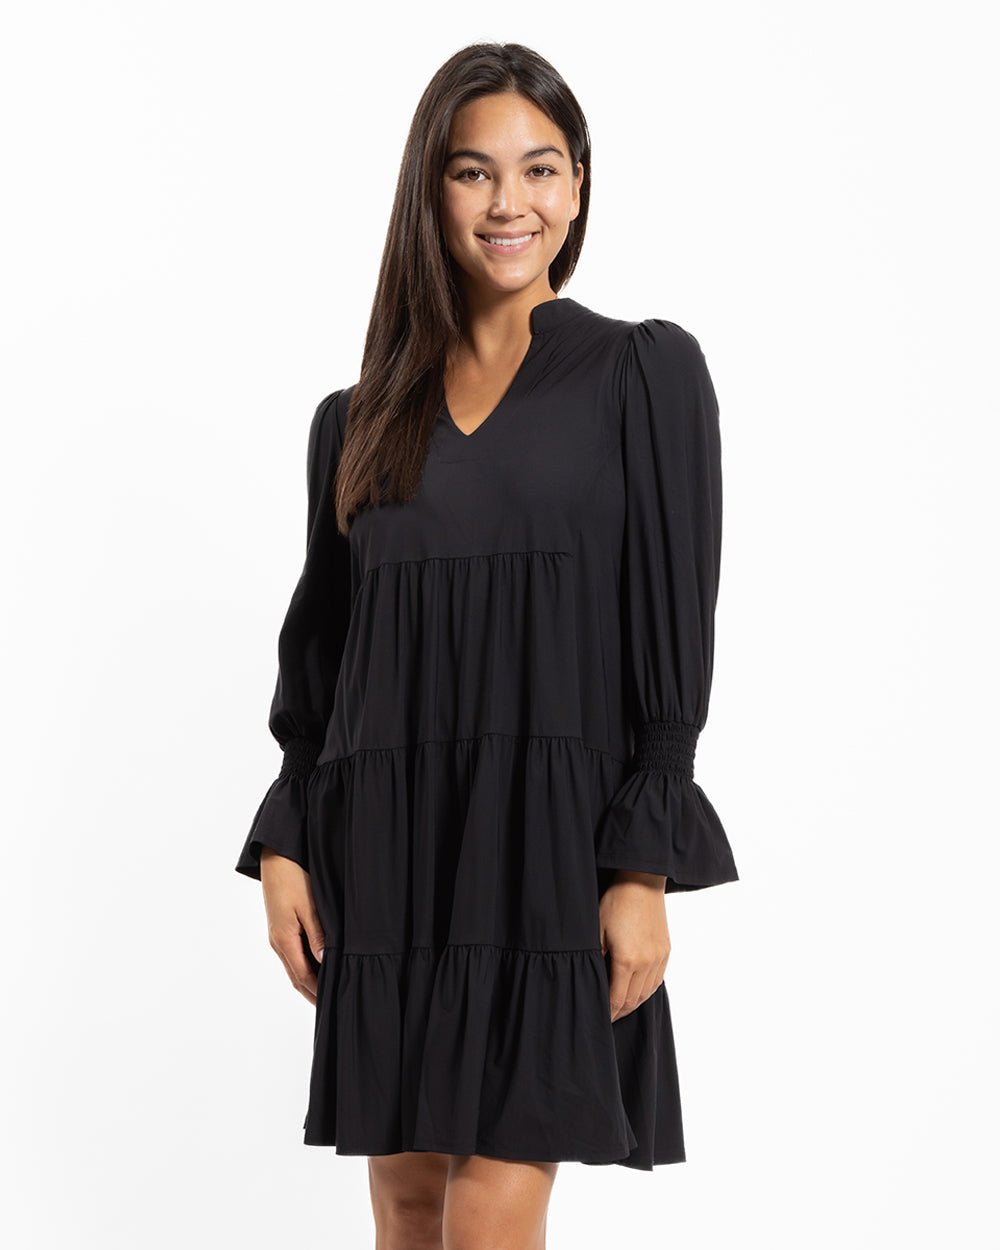 Jude Connally - Tammi Dress: Black - Shorely Chic Boutique